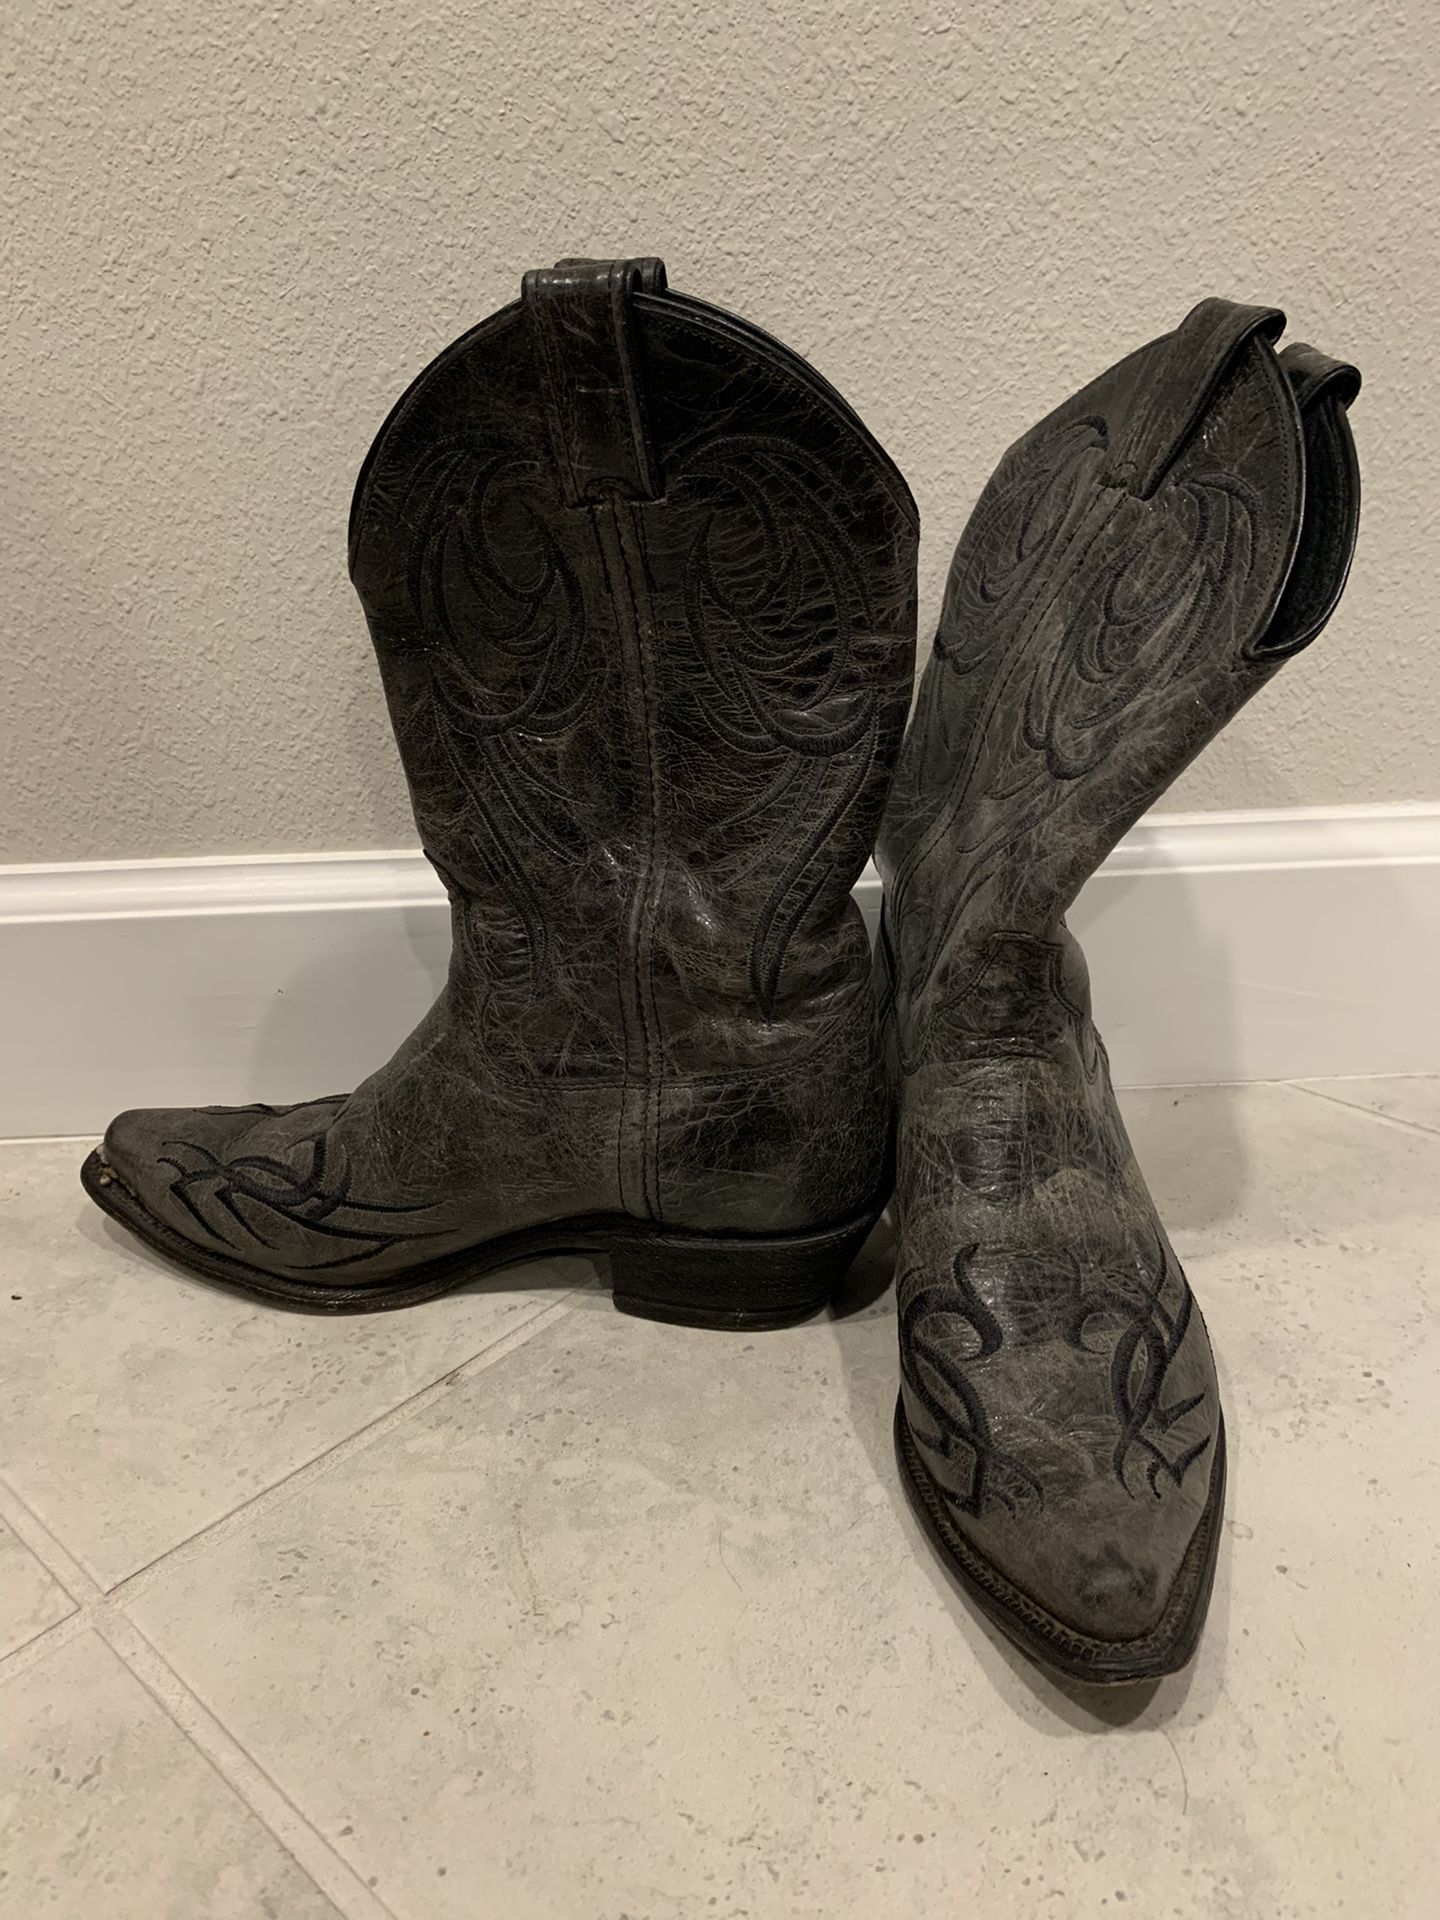 Women’s black boots